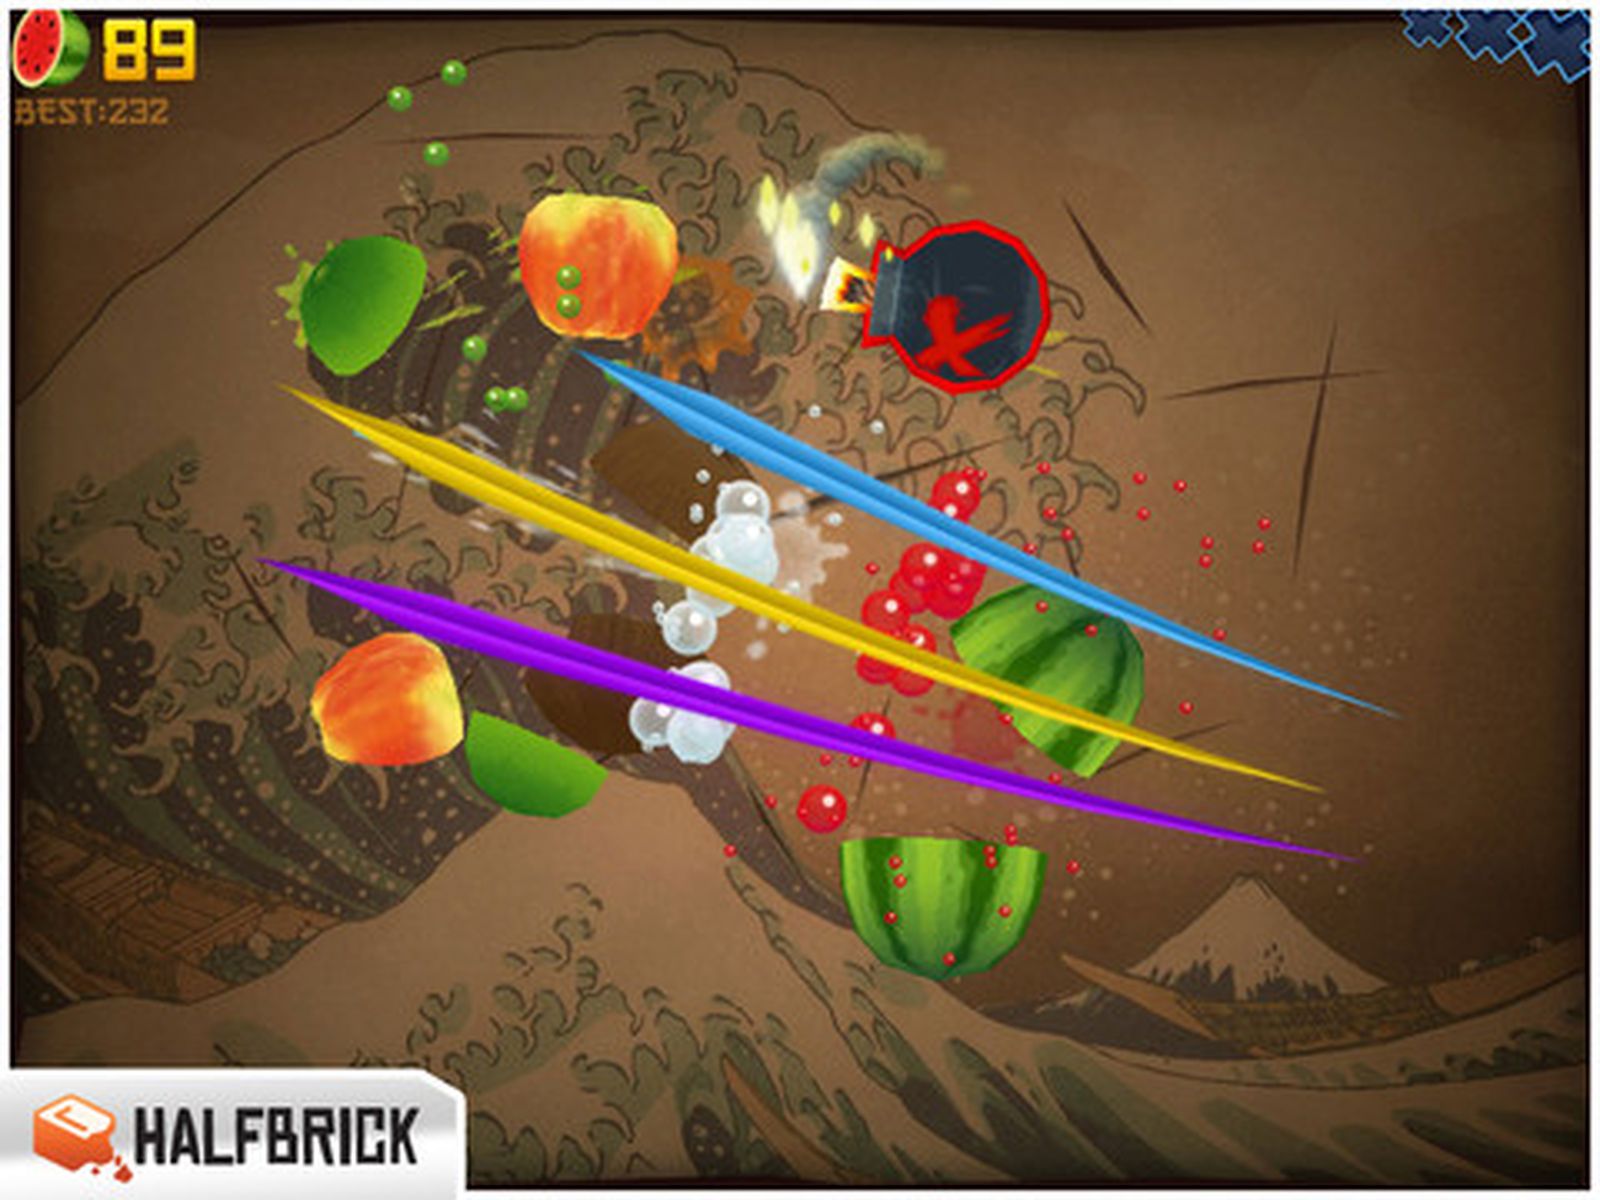 Fruit Ninja VR - Halfbrick